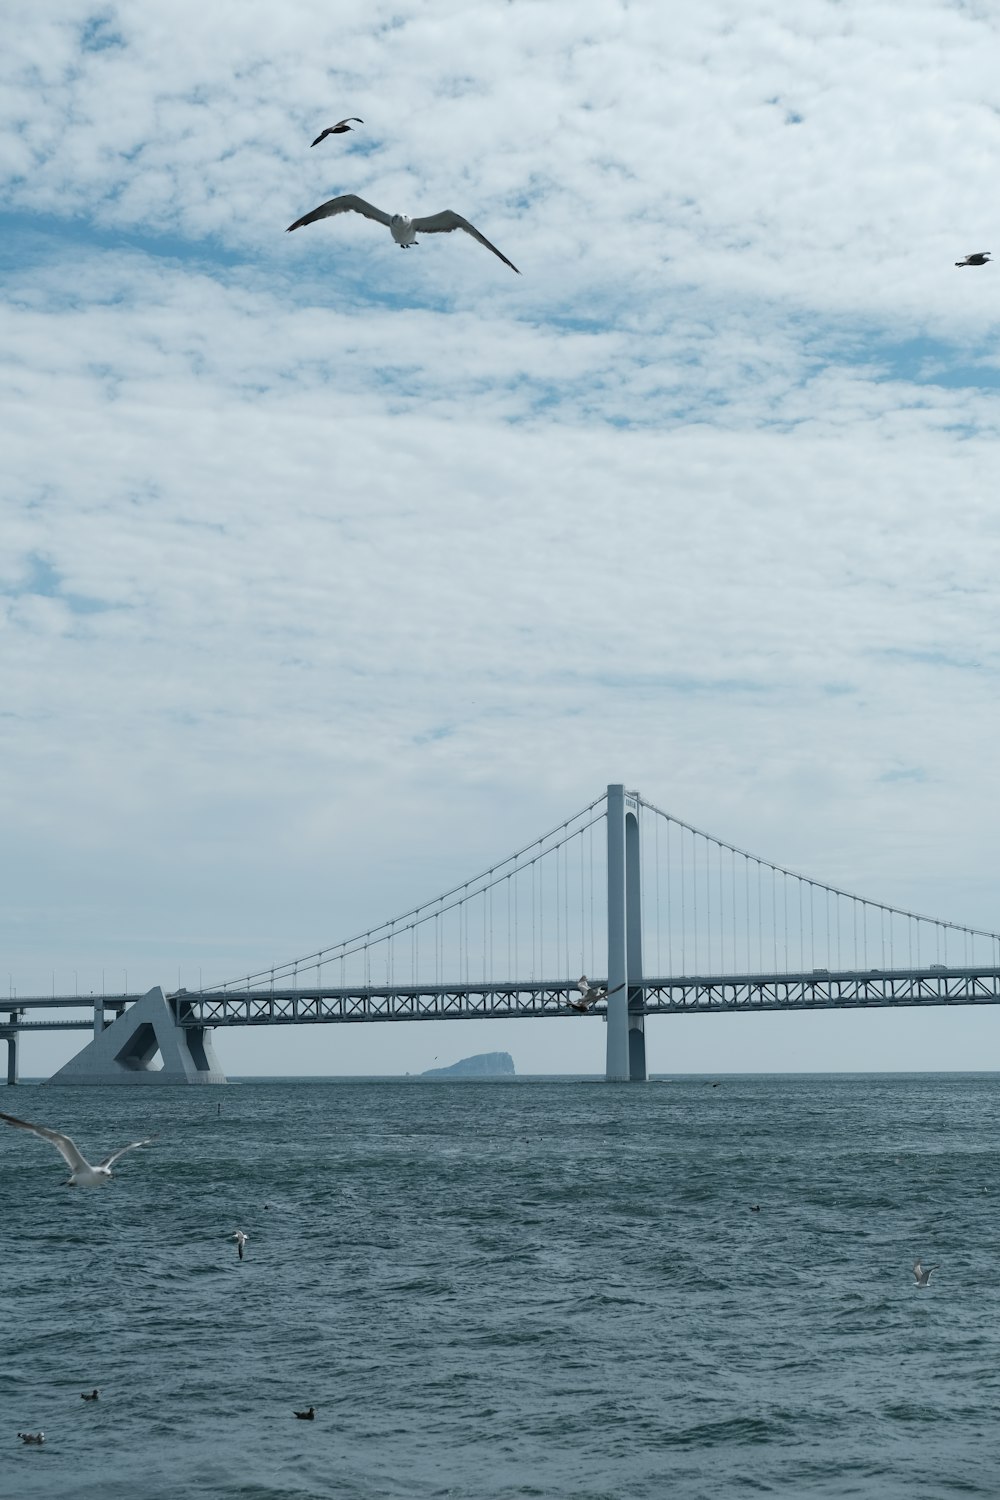 birds flying over a bridge